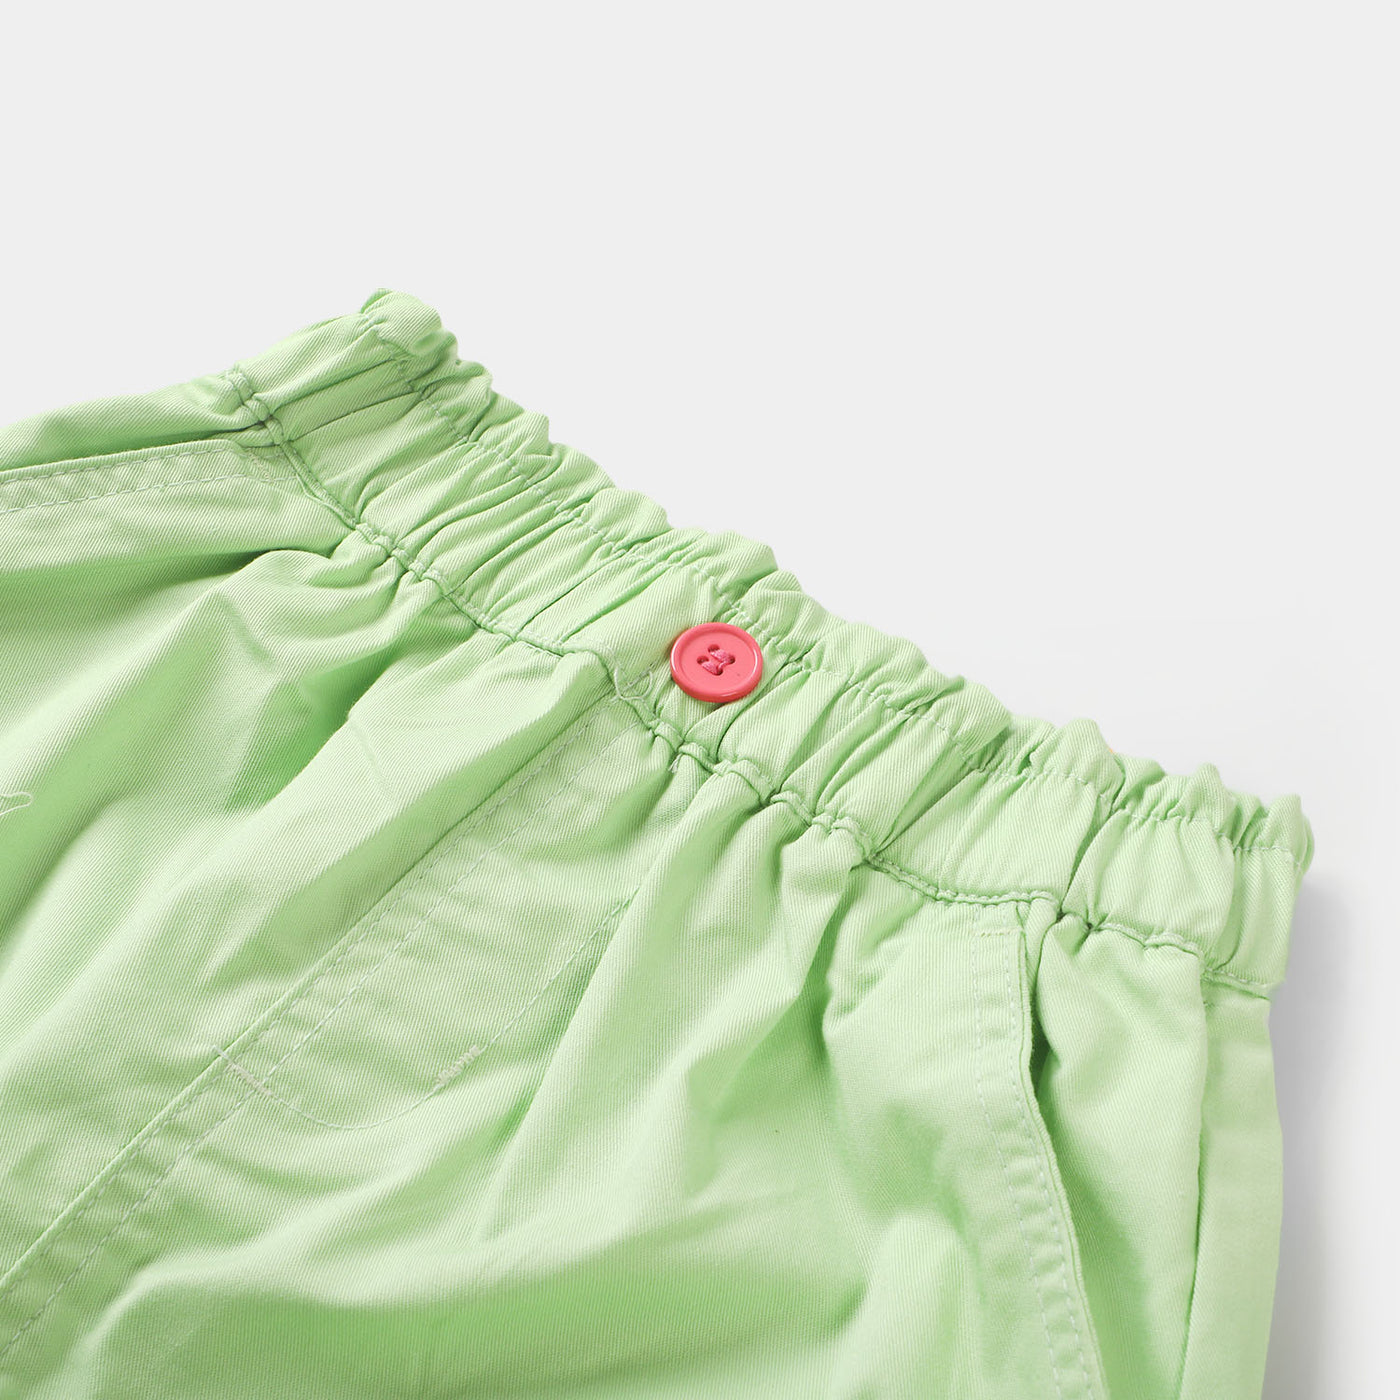 Girls Skirt Woven Happy Days - Sharp Green